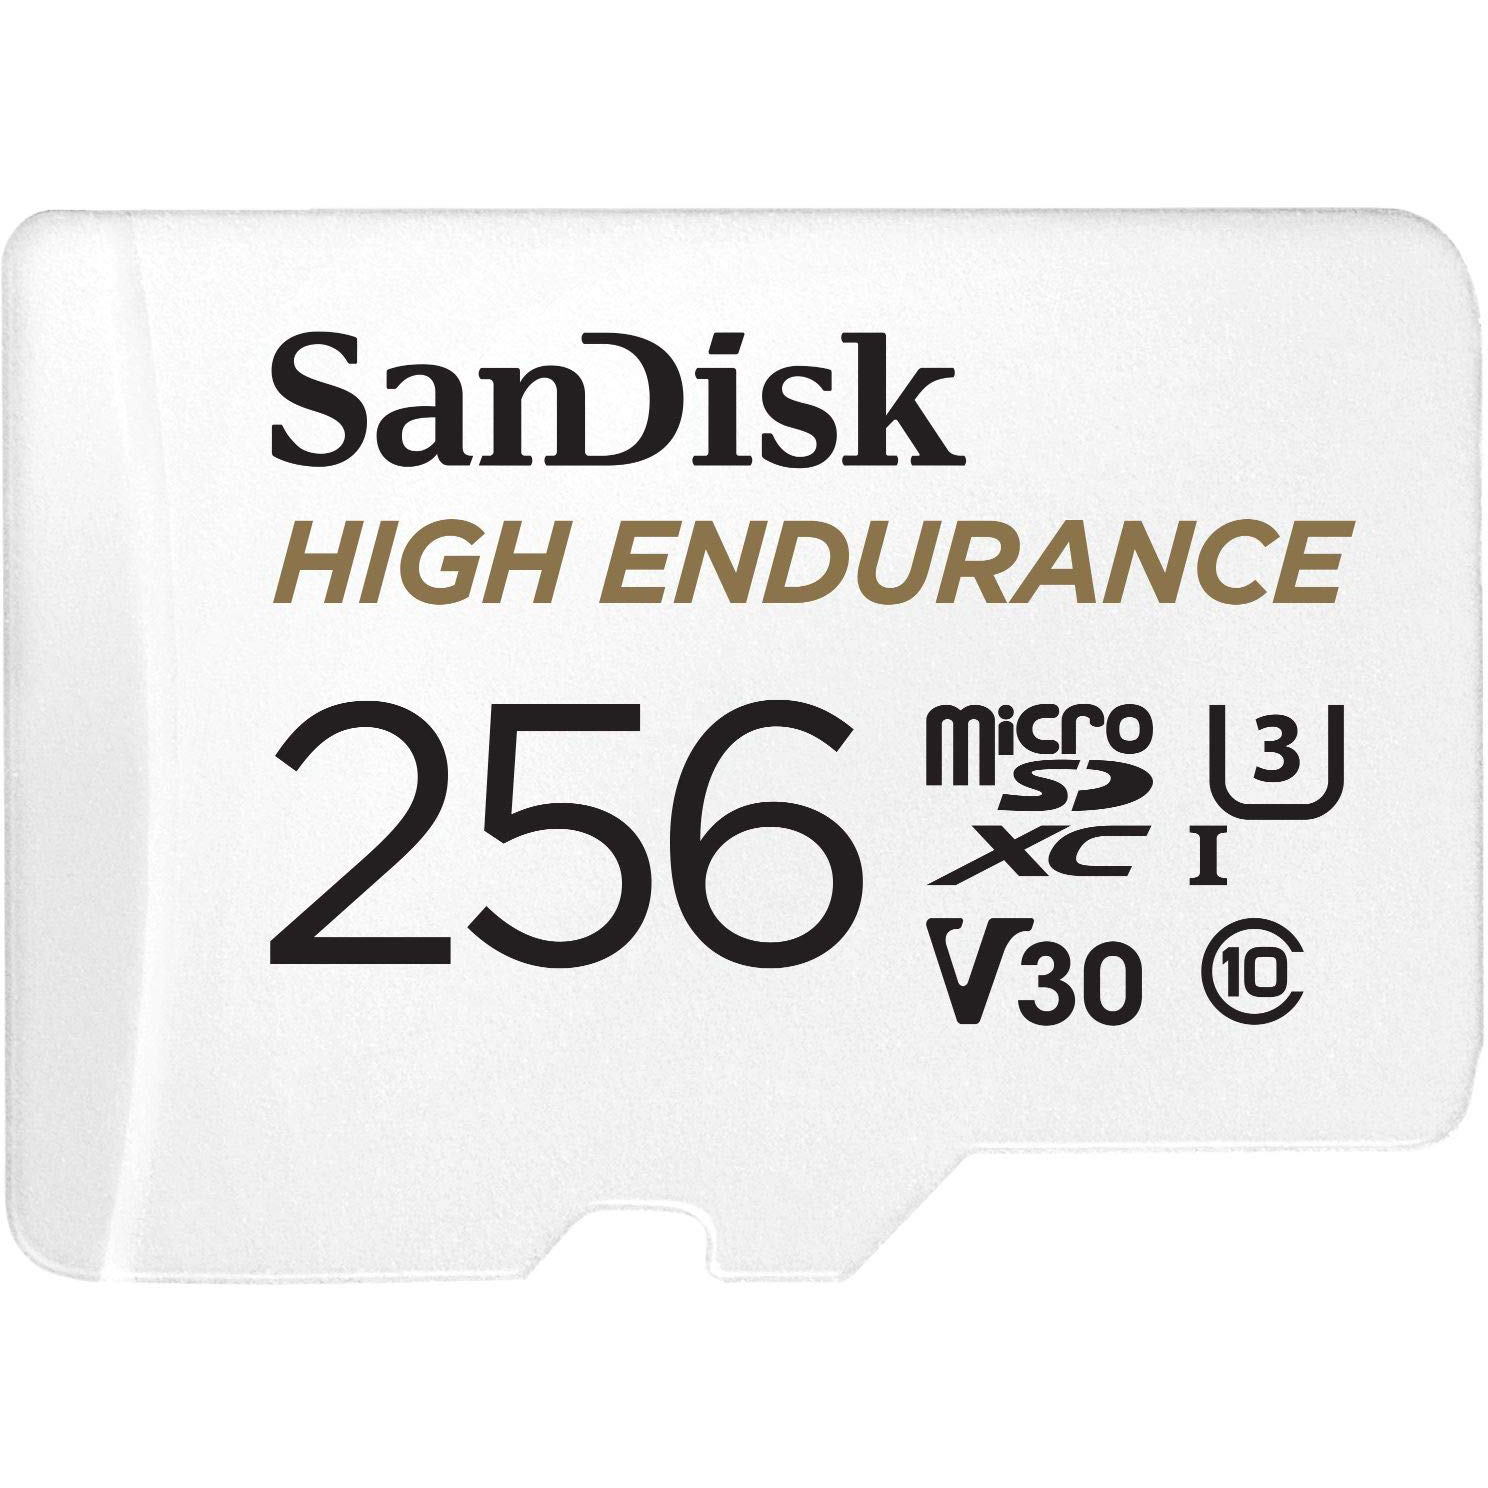 Original SanDisk 256GB High Endurance Video microSDXC Card (SDSQQVR-256G-GN6)